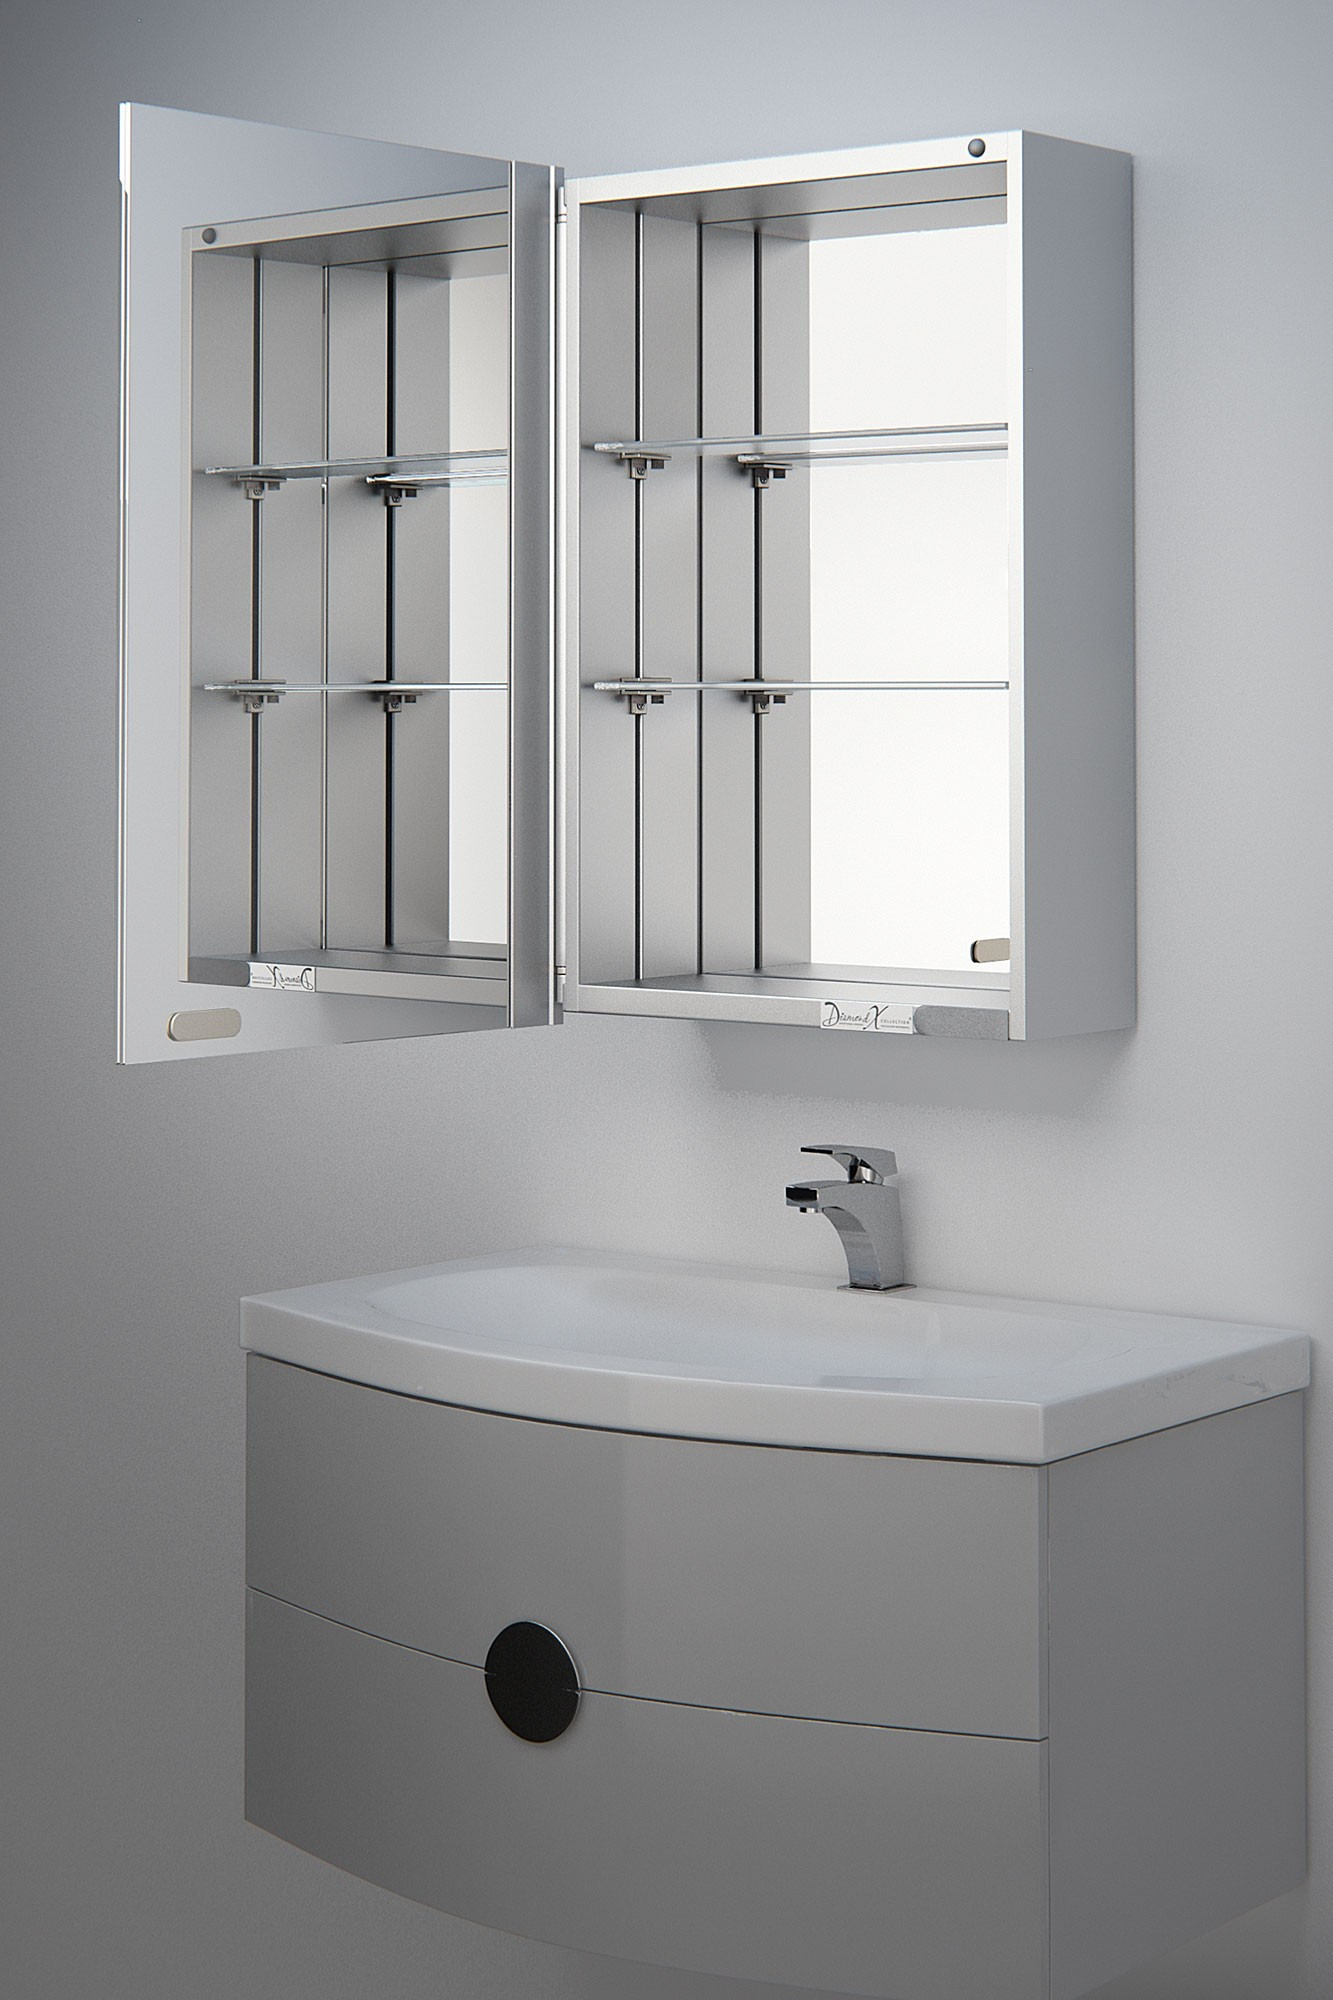 Bathroom Cabinet Mirrors
 Alban mirrored bathroom cabinet mirror H 600mm x W 400mm